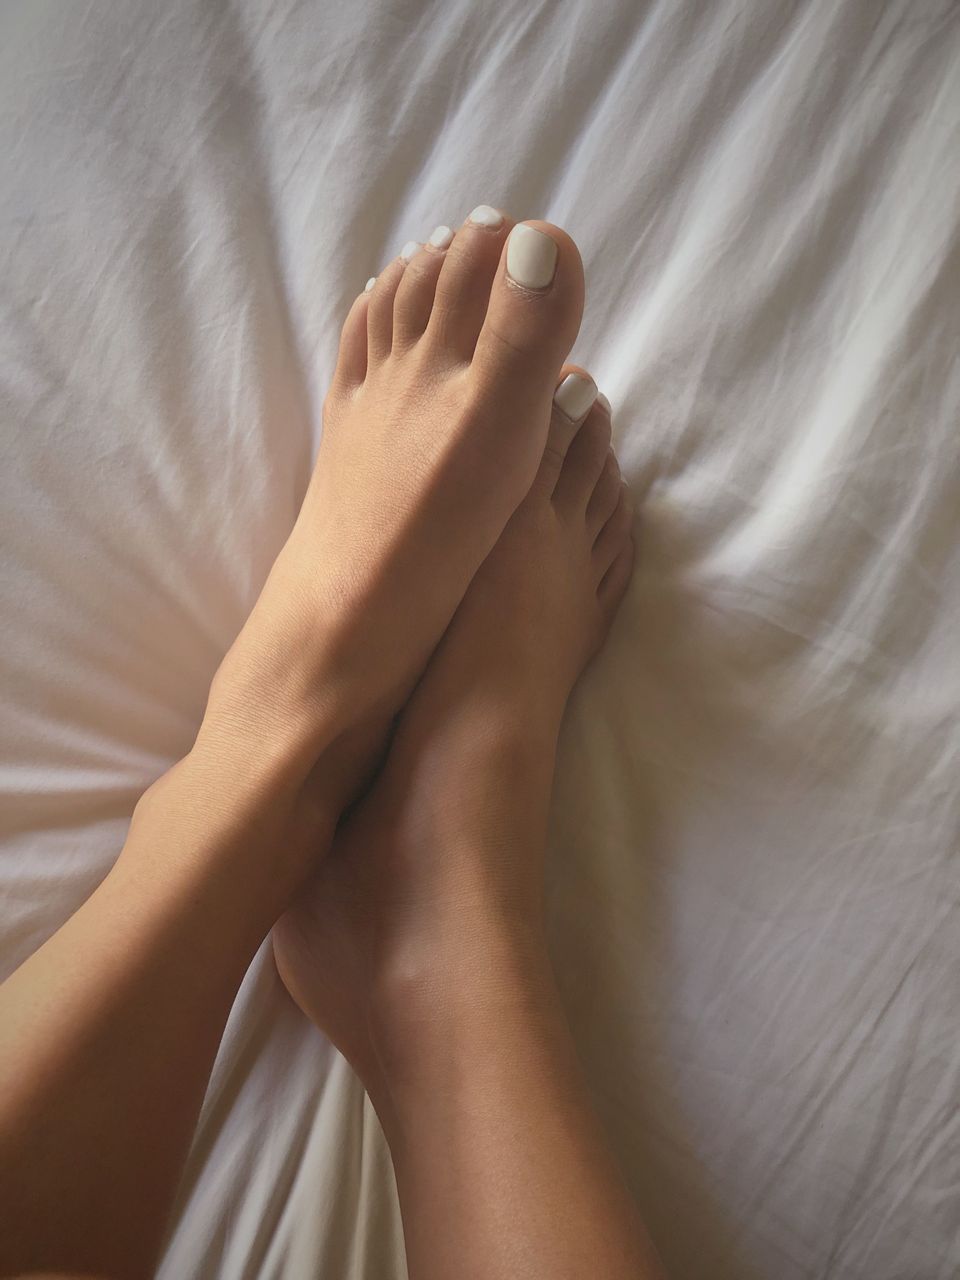 M Got Nice Feet Good Morning